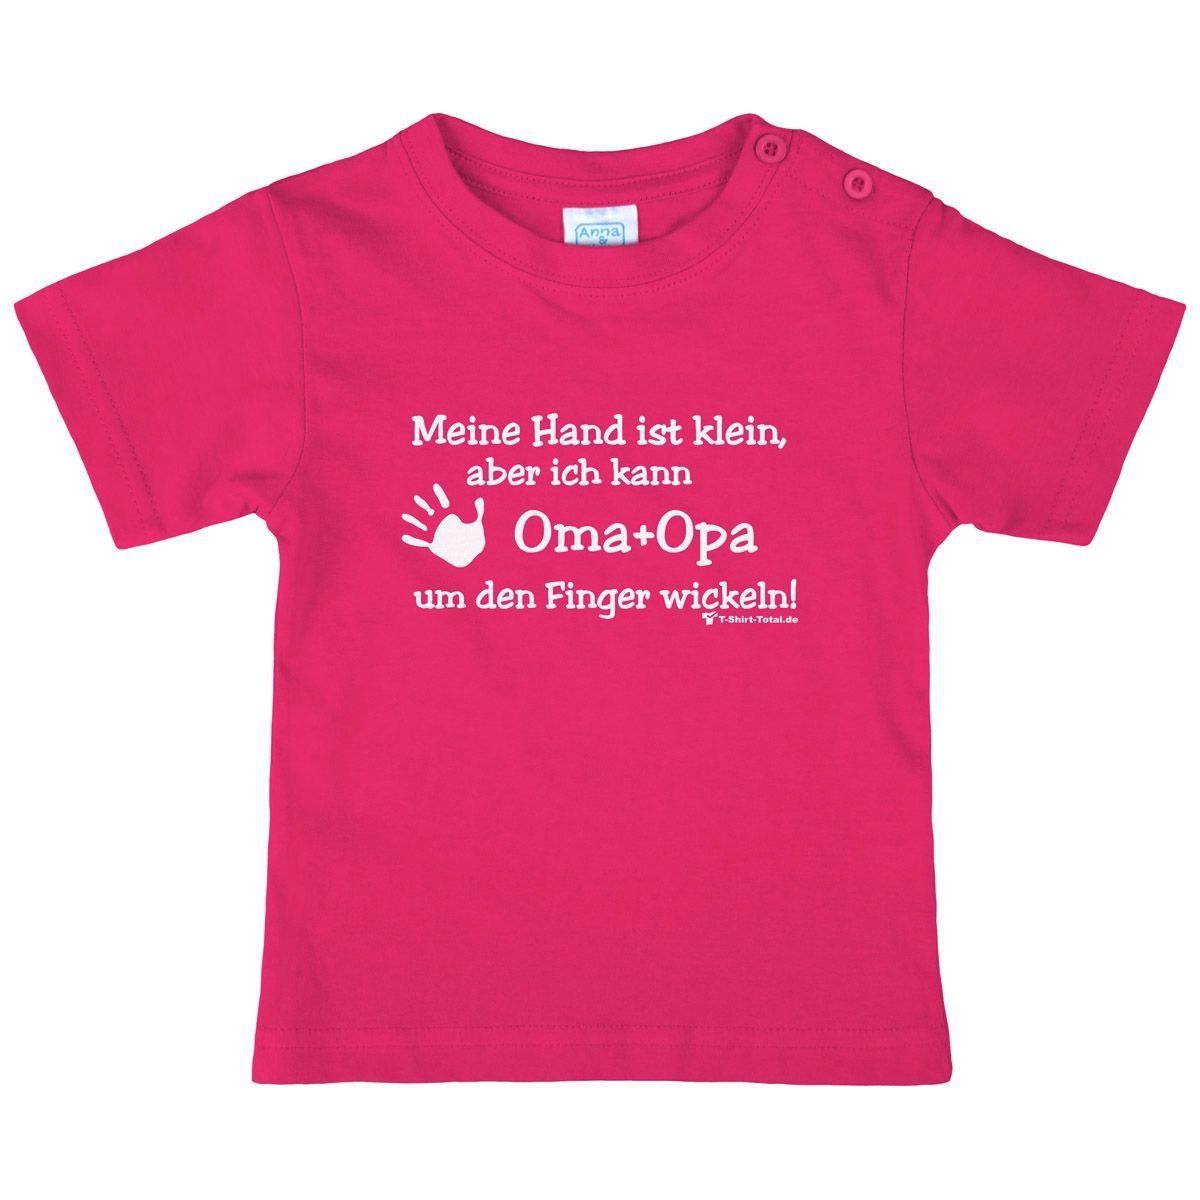 Kleine Hand Oma Opa Kinder T-Shirt pink 104